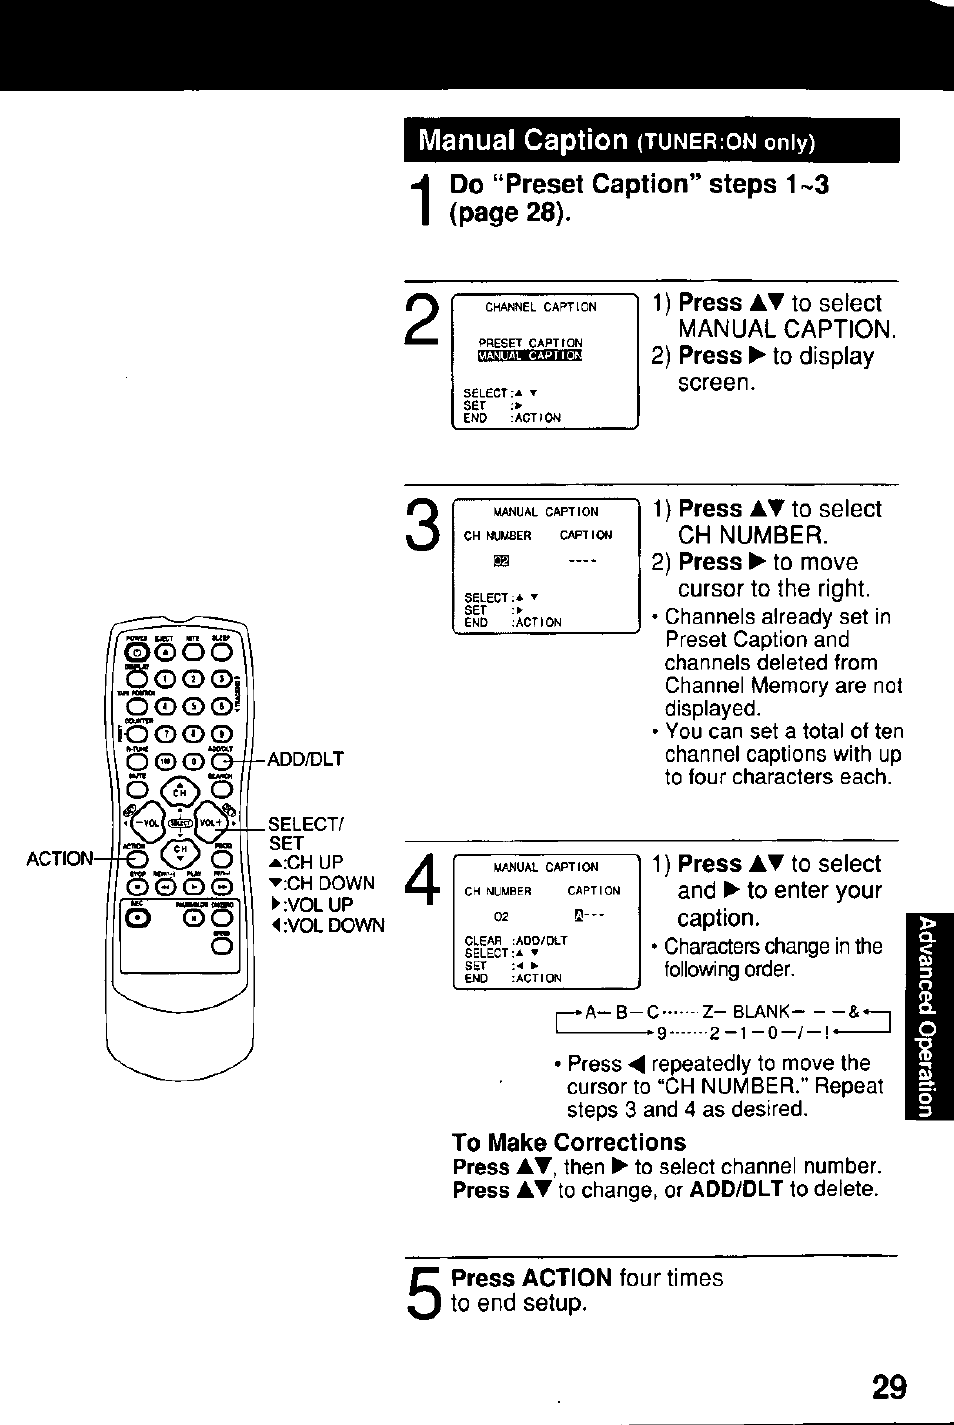 To make corrections, Manual caption | Panasonic Combinatin VCR AG-513E User Manual | Page 29 / 40